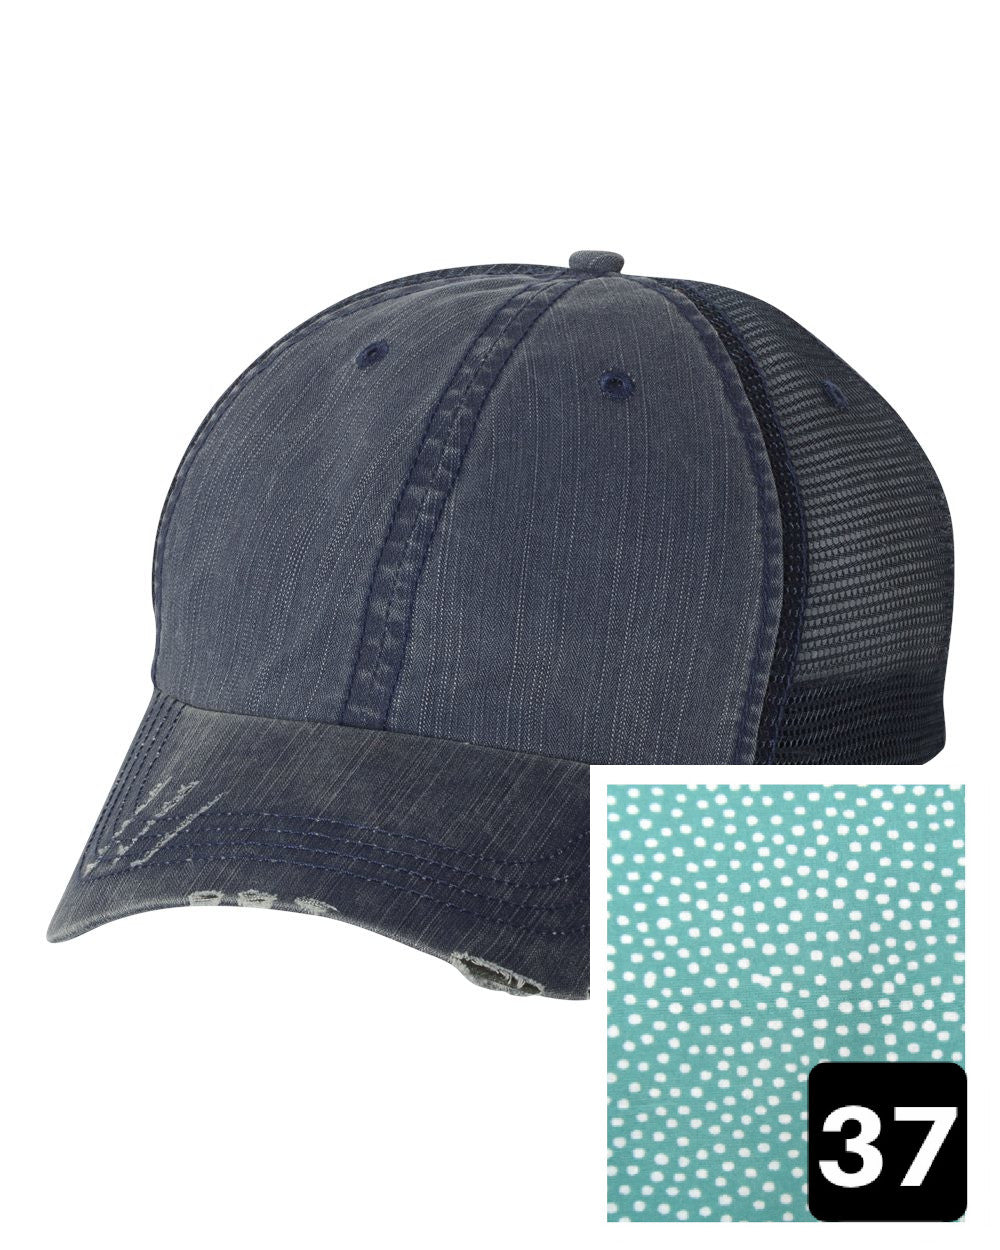 Missouri Hat | Navy Distressed Trucker Cap | Many Fabric Choices